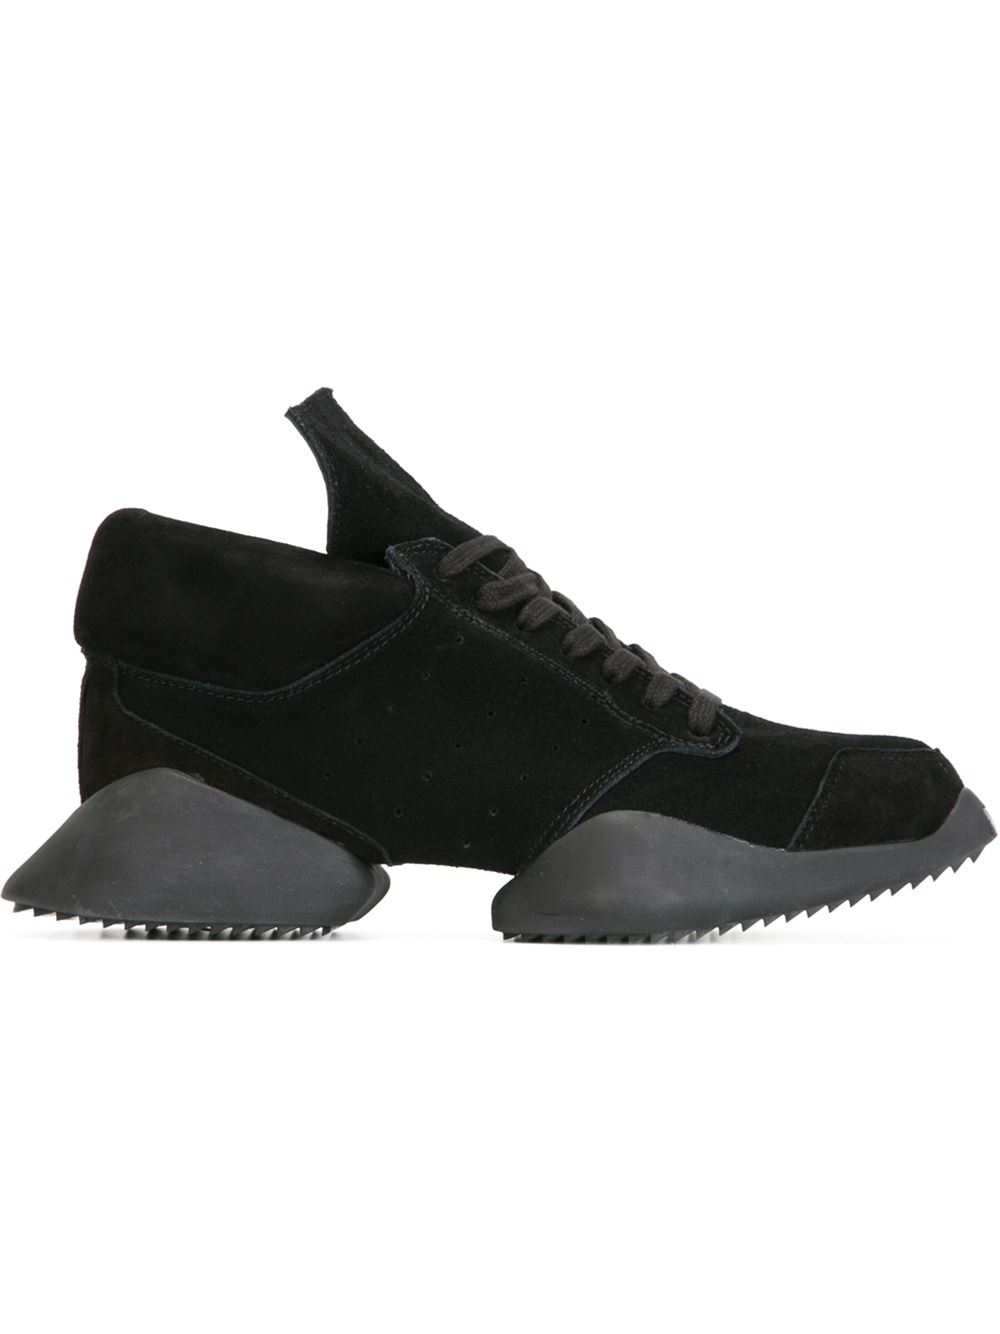 Rick owens X Adidas 'tech Runner' Sneakers in Black | Lyst